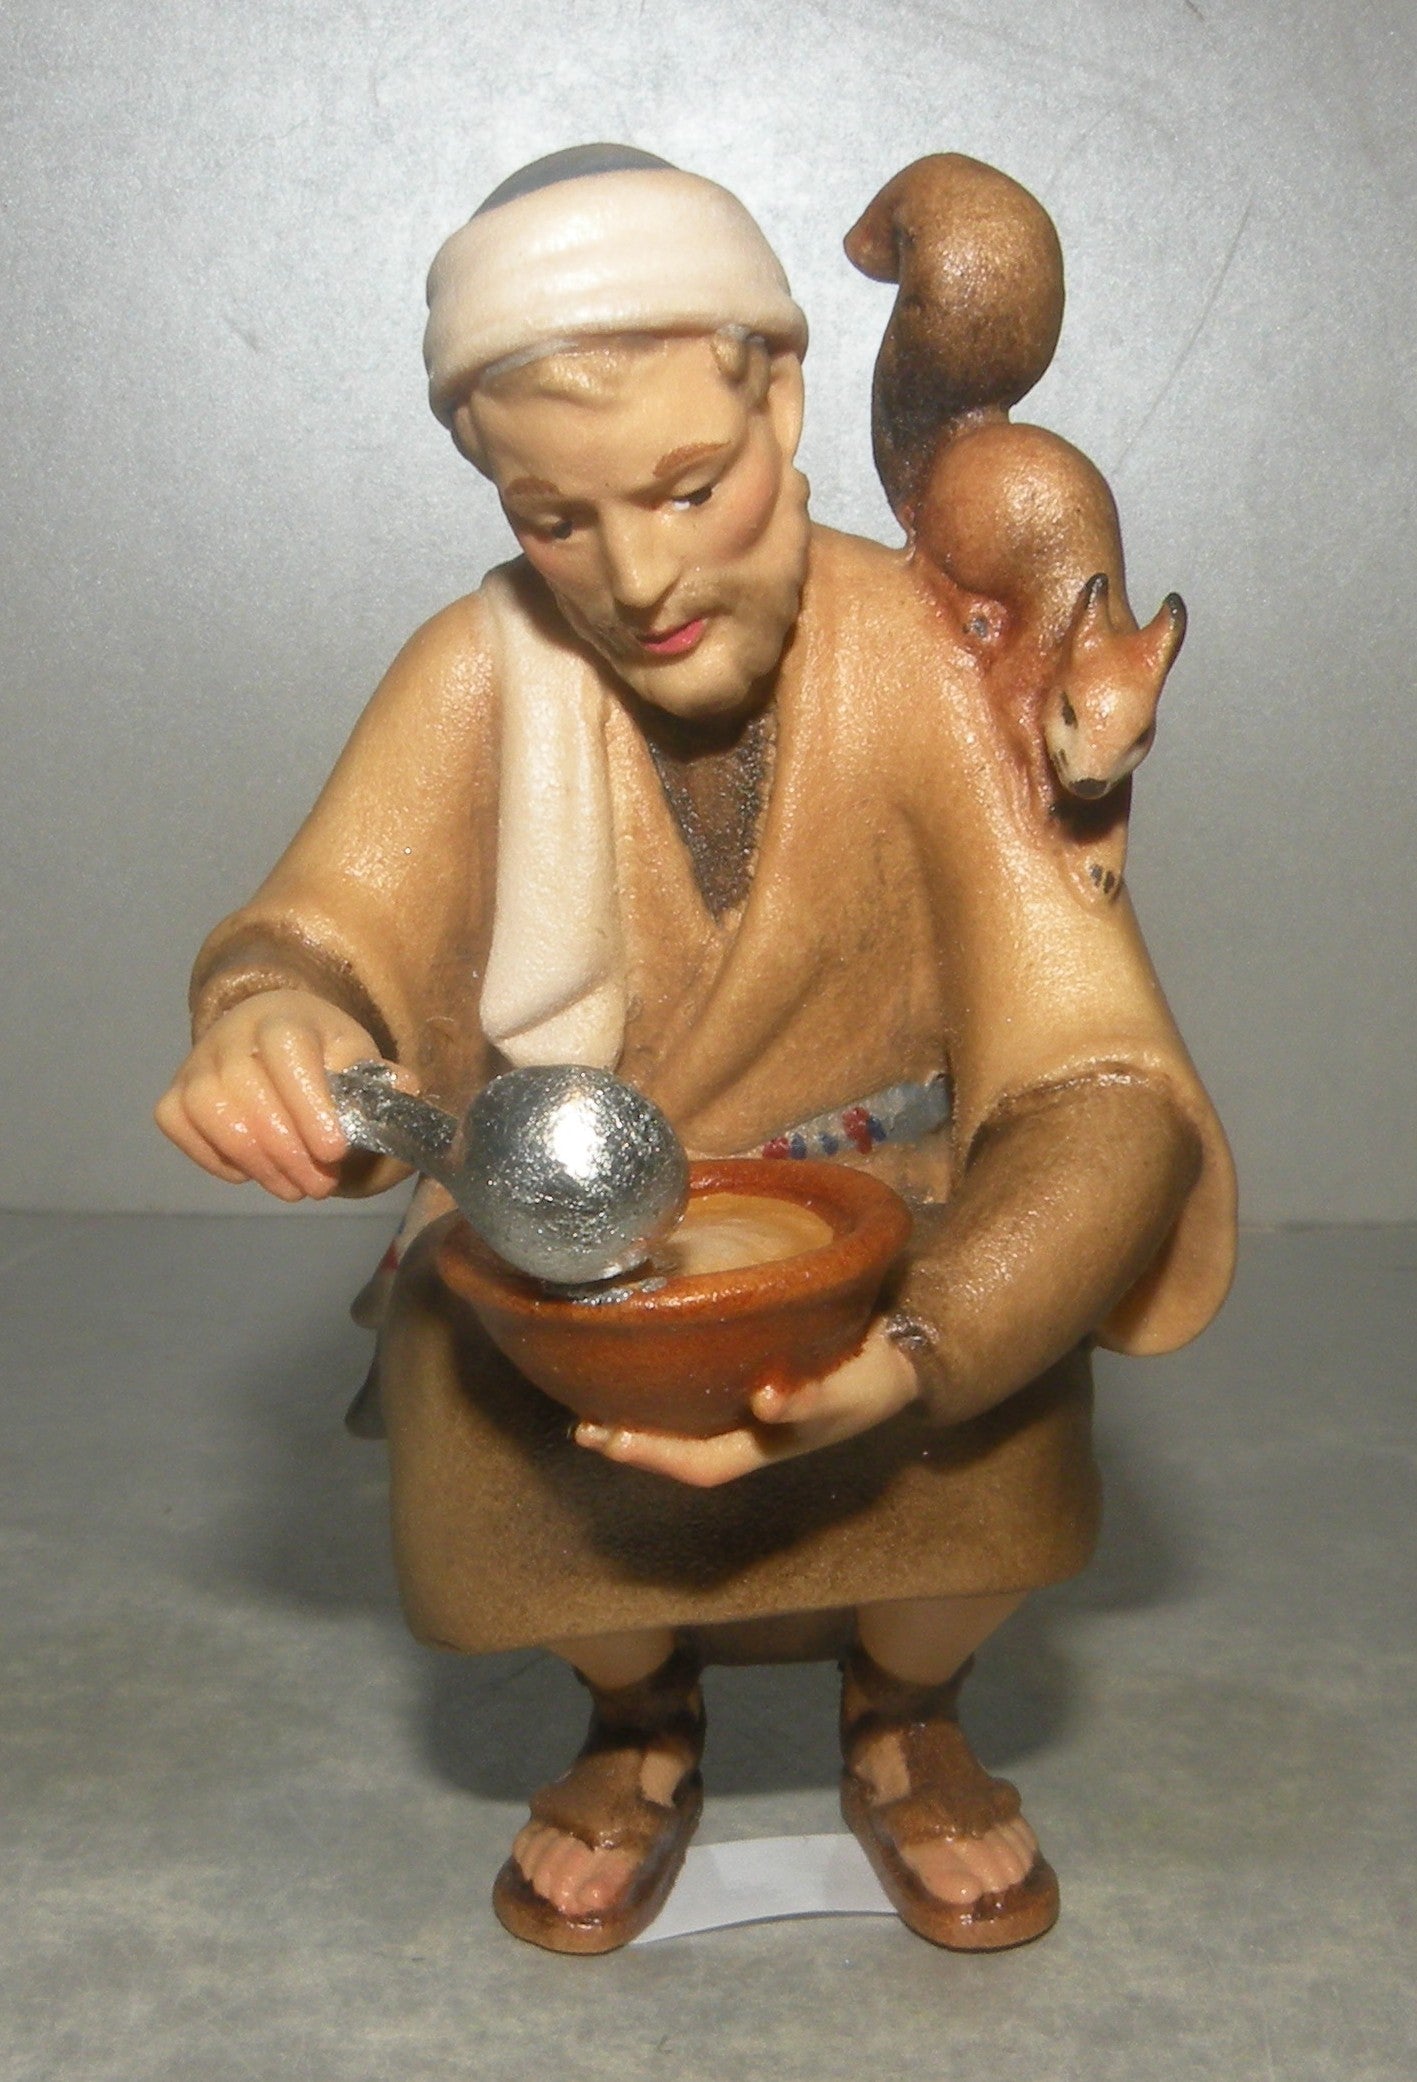 Shepherd with ladle and soup, Gloria